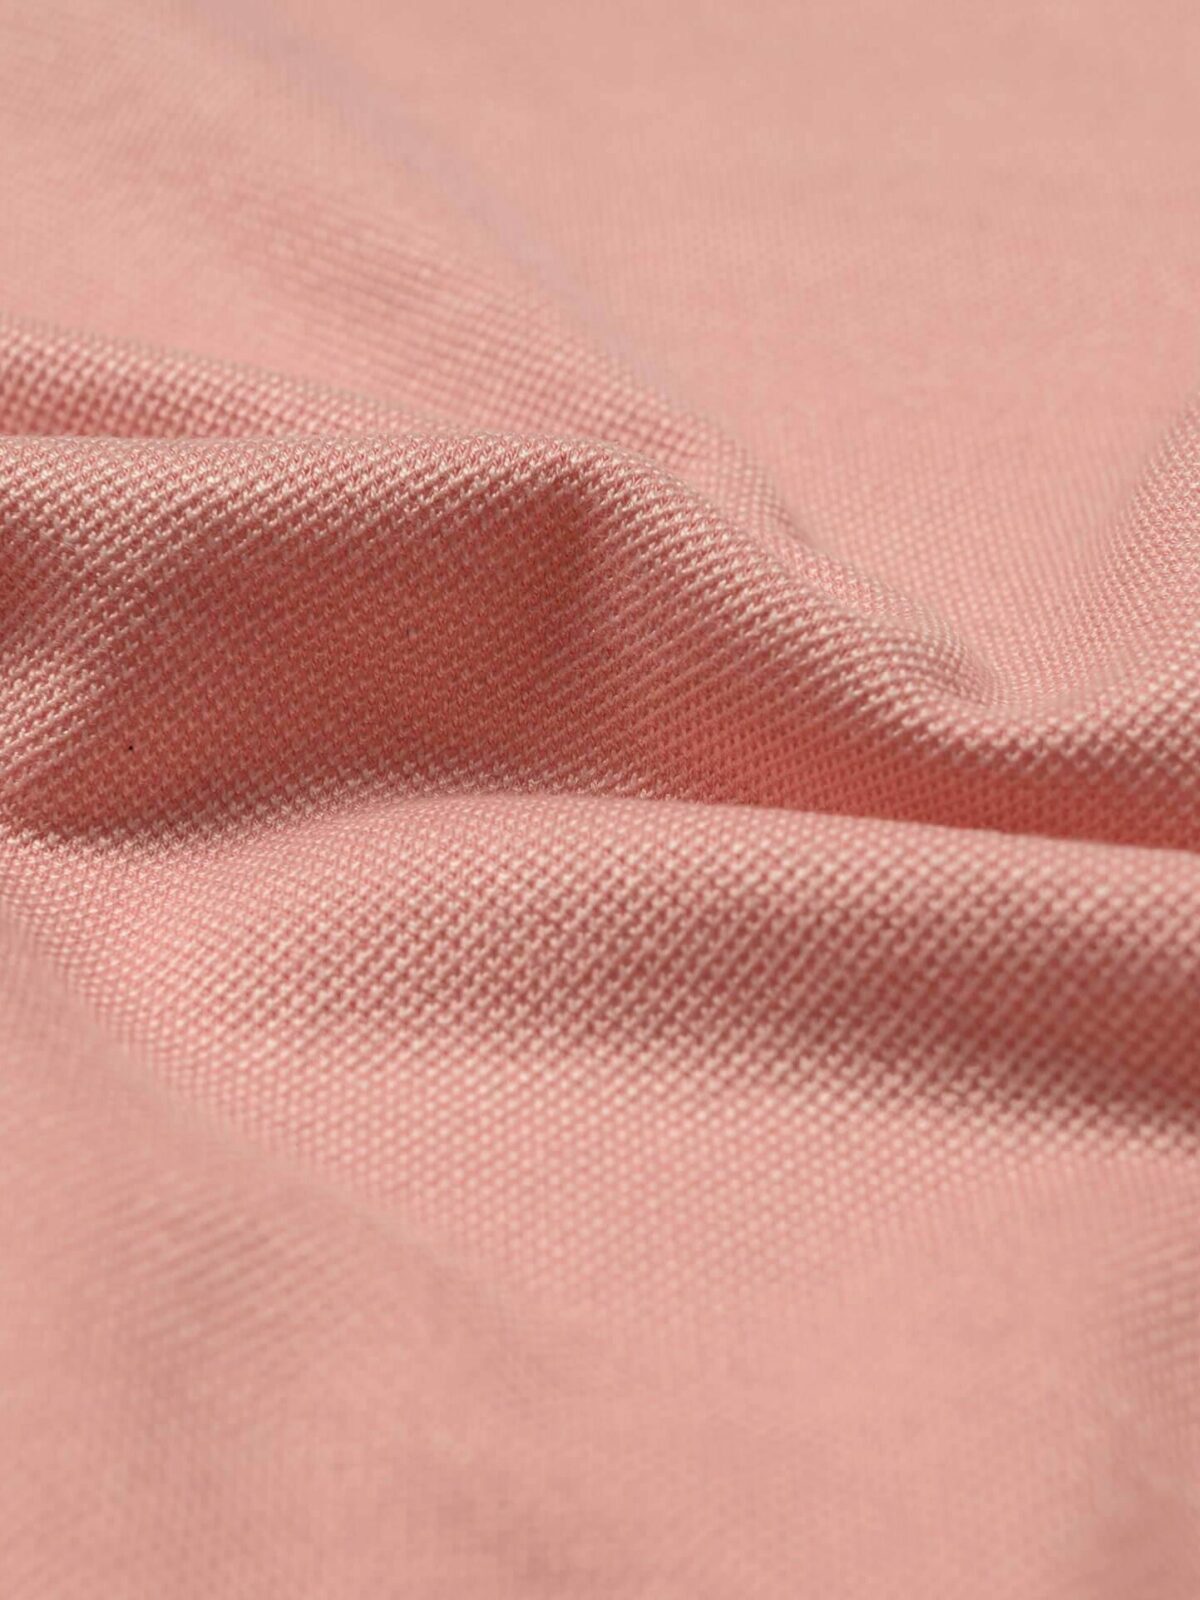 Tencel Knit Cloth Proper Peach Shirts by Cotton Carmel Pique and